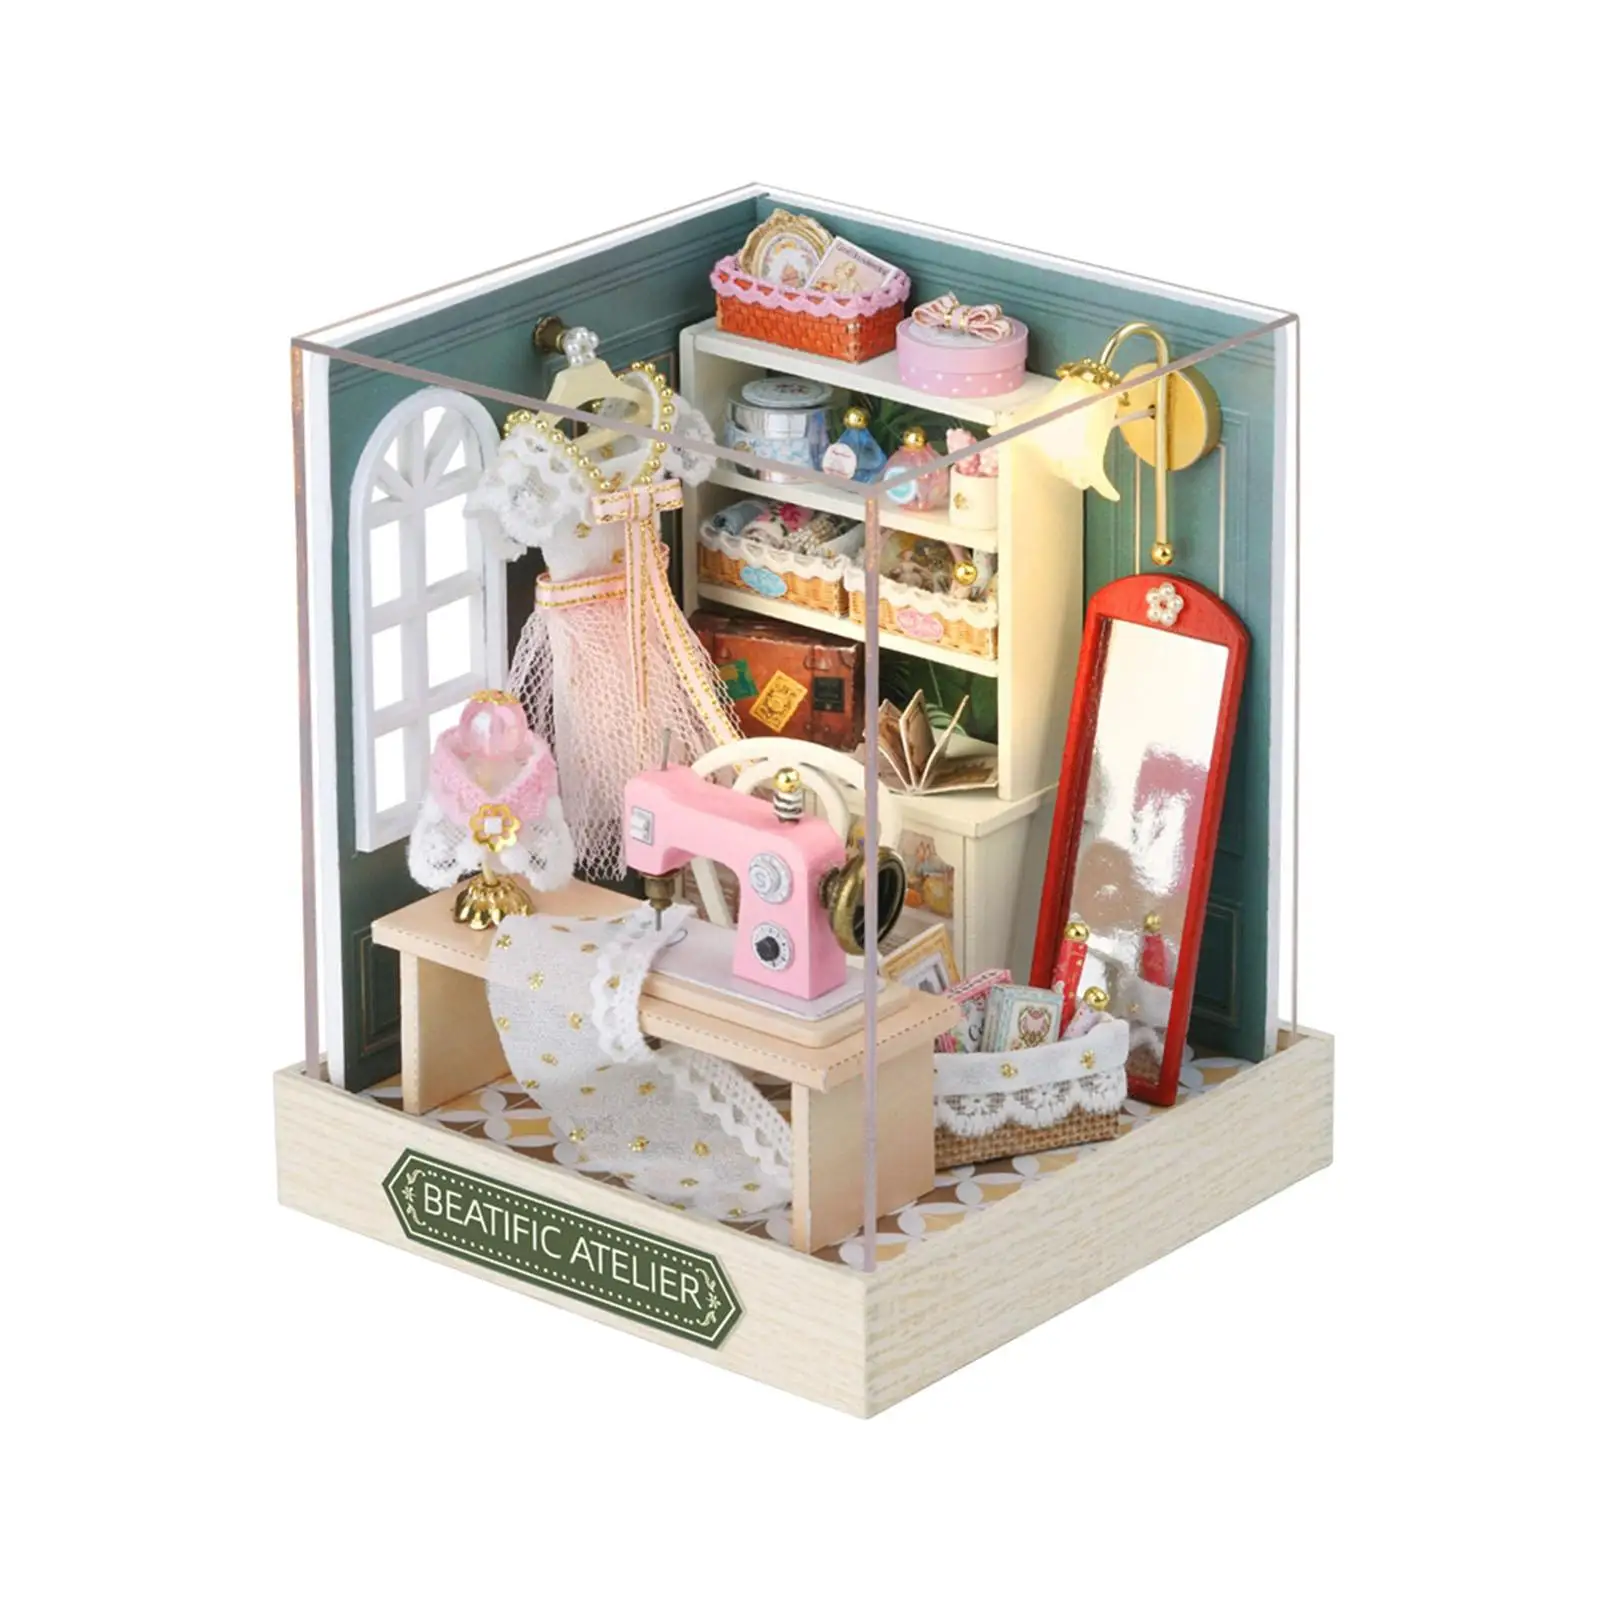 Miniature Dolls House Kits Decorations 3D Puzzles for Kids Adults Friends